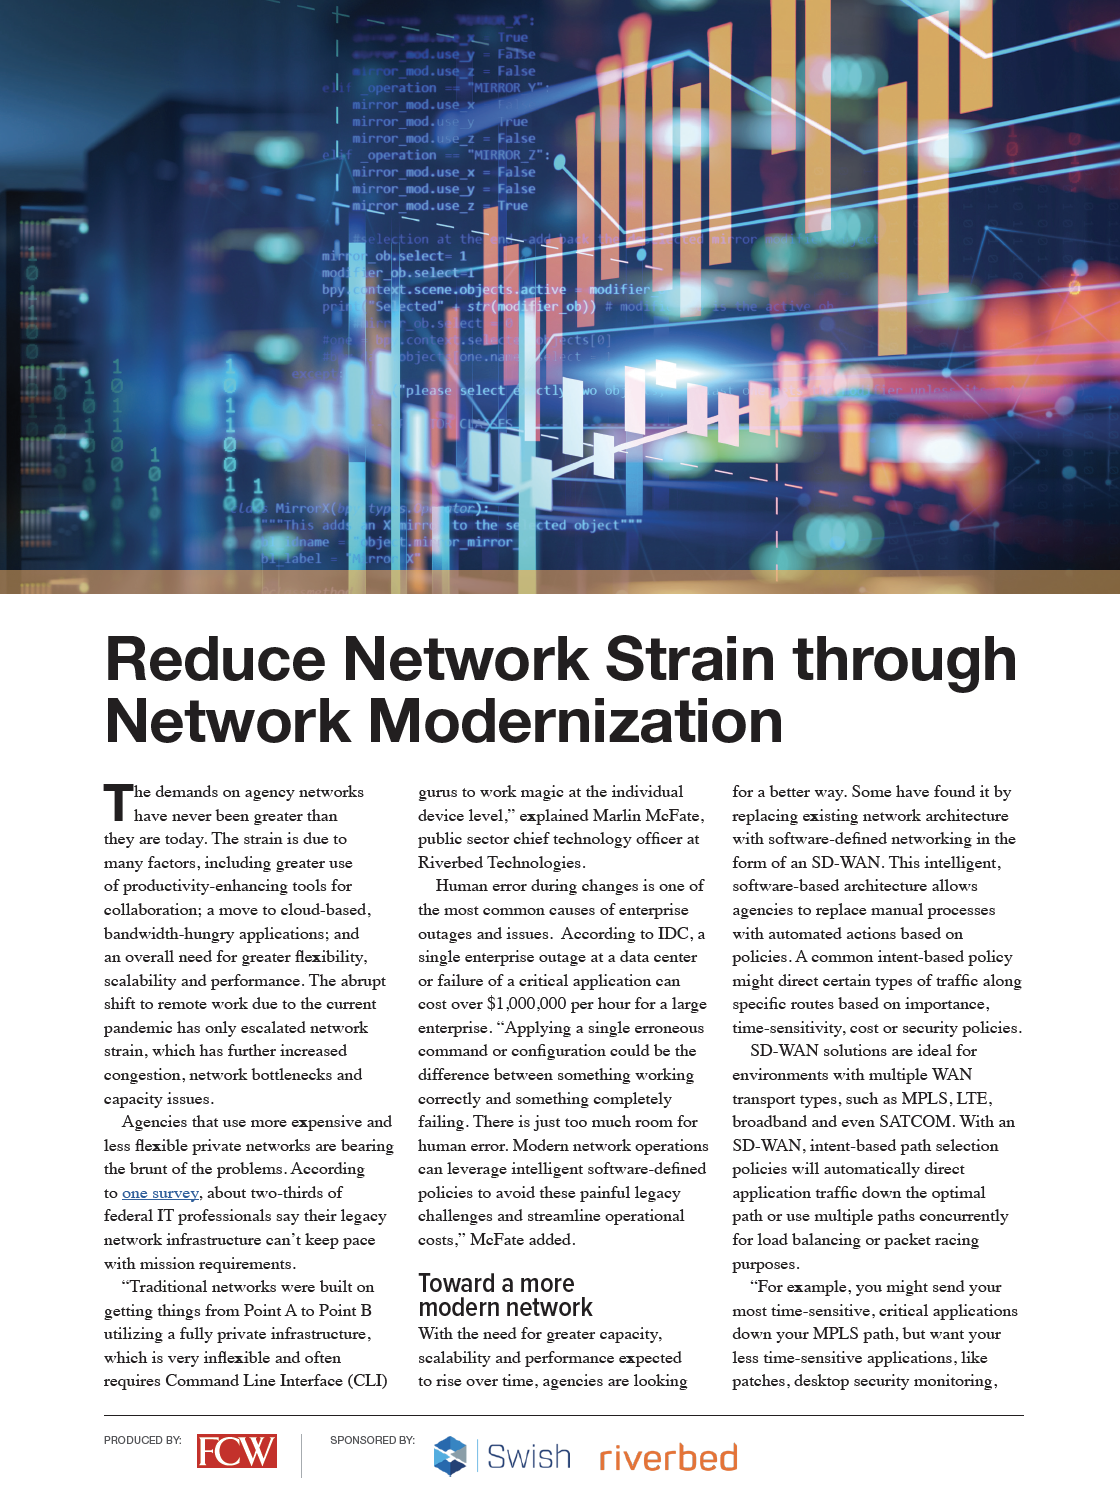 Reduce Network Strain through Network Modernization pdf cover